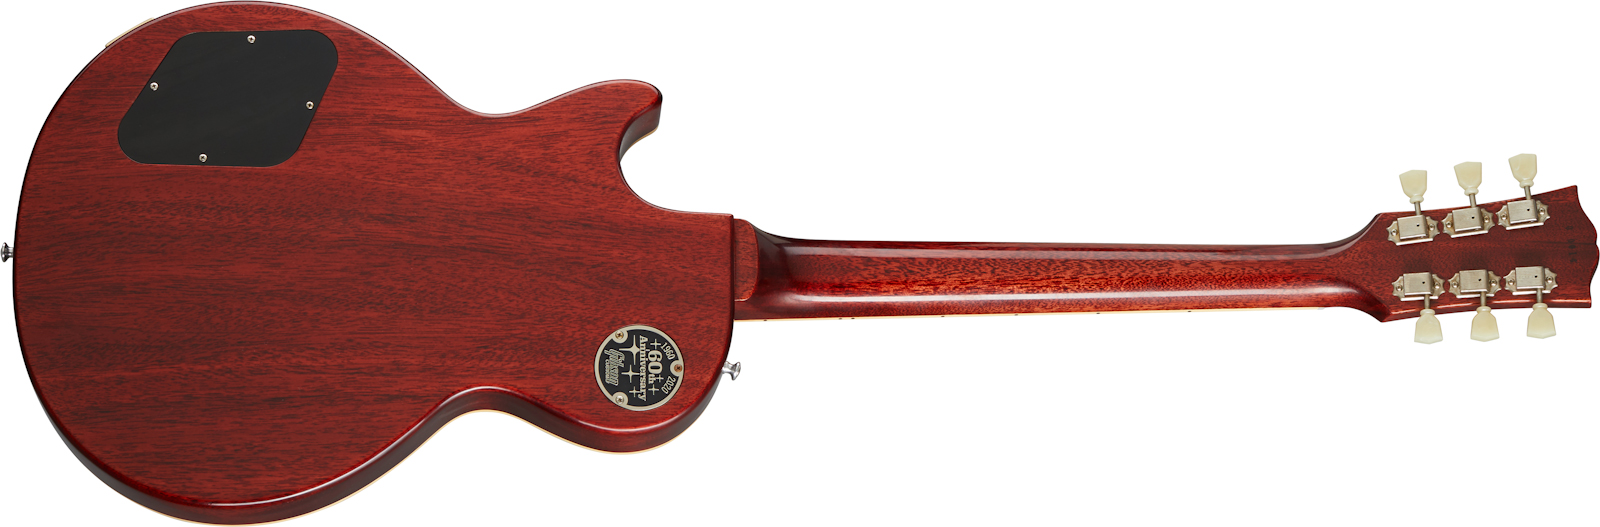 Gibson Custom Shop Les Paul Standard 1960 V1 60th Anniversary 2h Ht Rw - Vos Antiquity Burst - Enkel gesneden elektrische gitaar - Variation 1